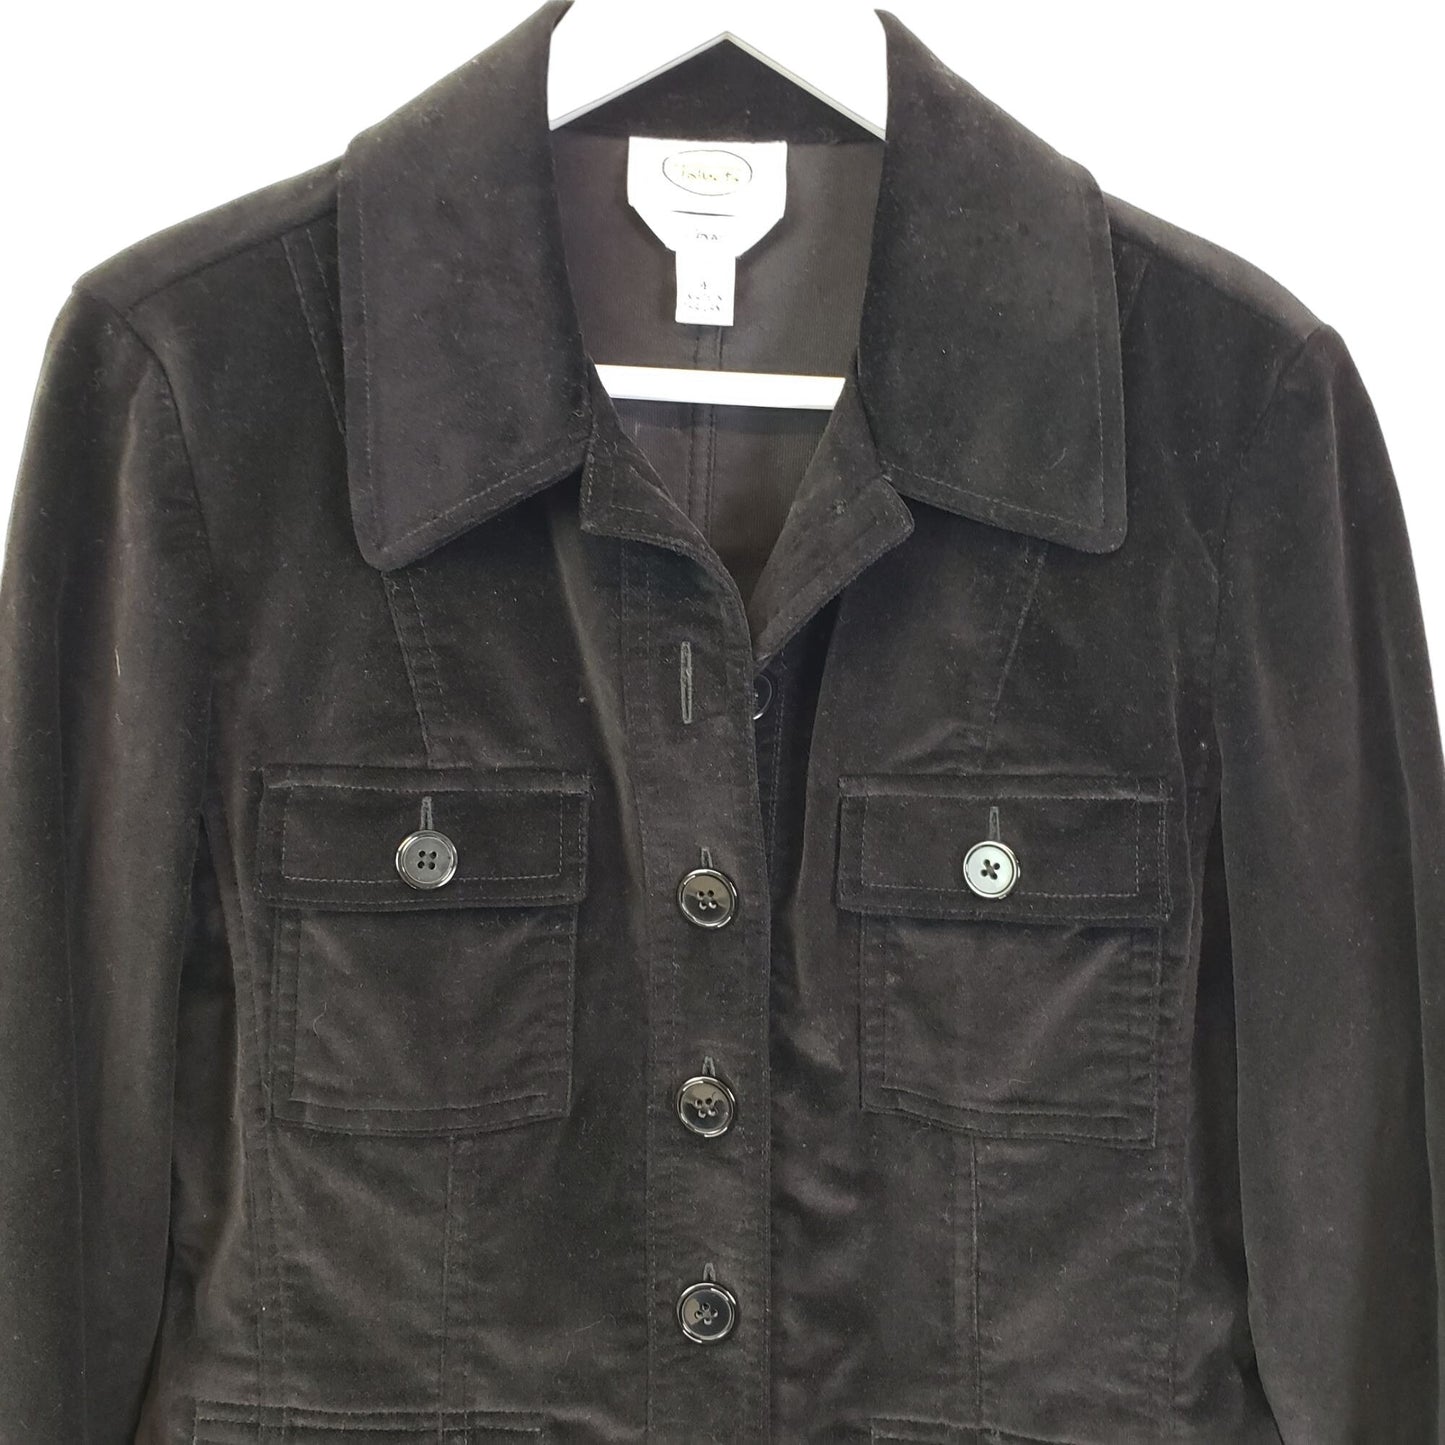 Talbots Black Velvet Button Front Jacket Size 4